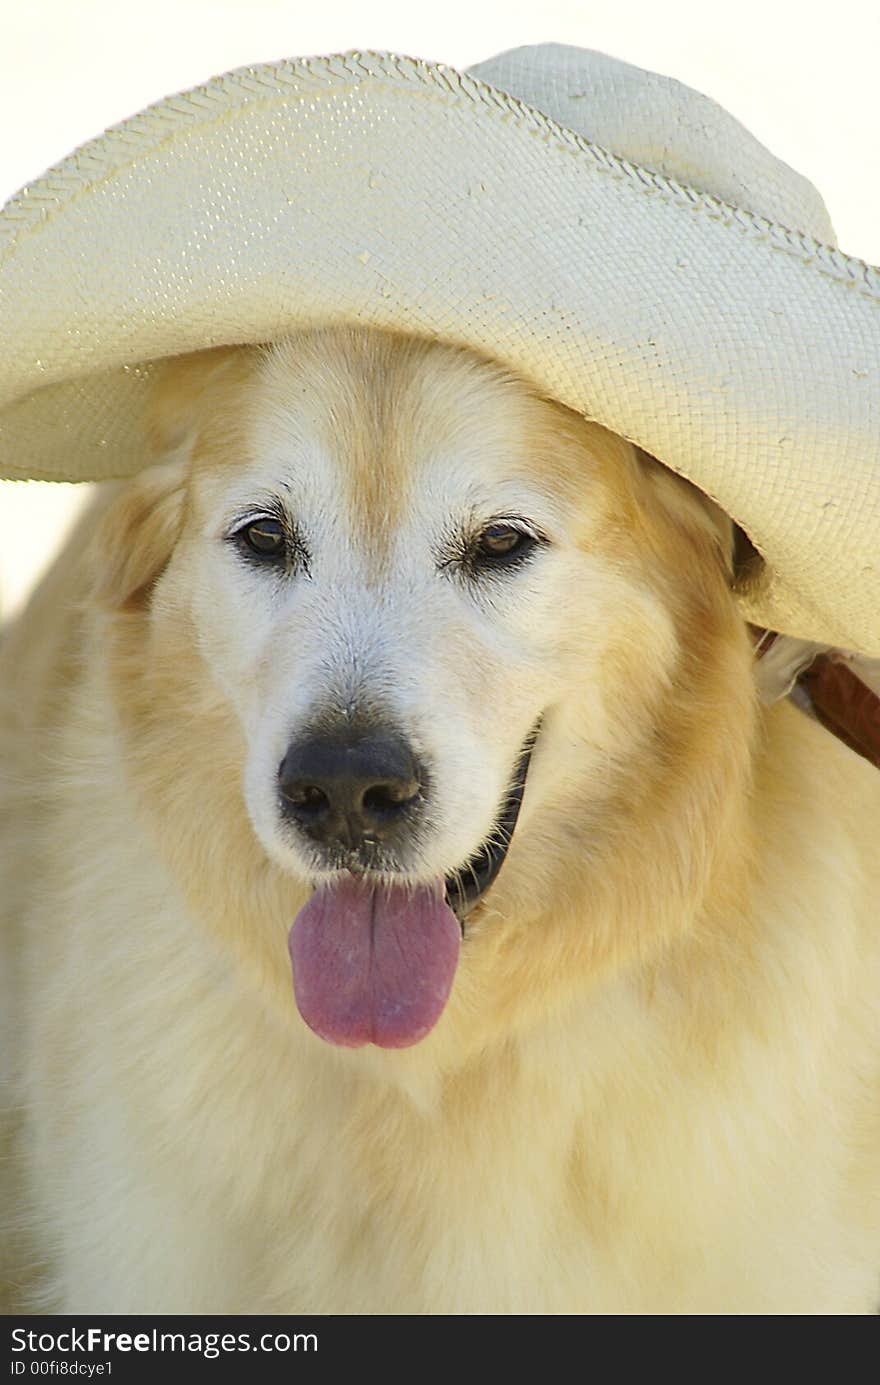 A nice smiling golden retriever dog or canine with a nice straw hat. A nice smiling golden retriever dog or canine with a nice straw hat.